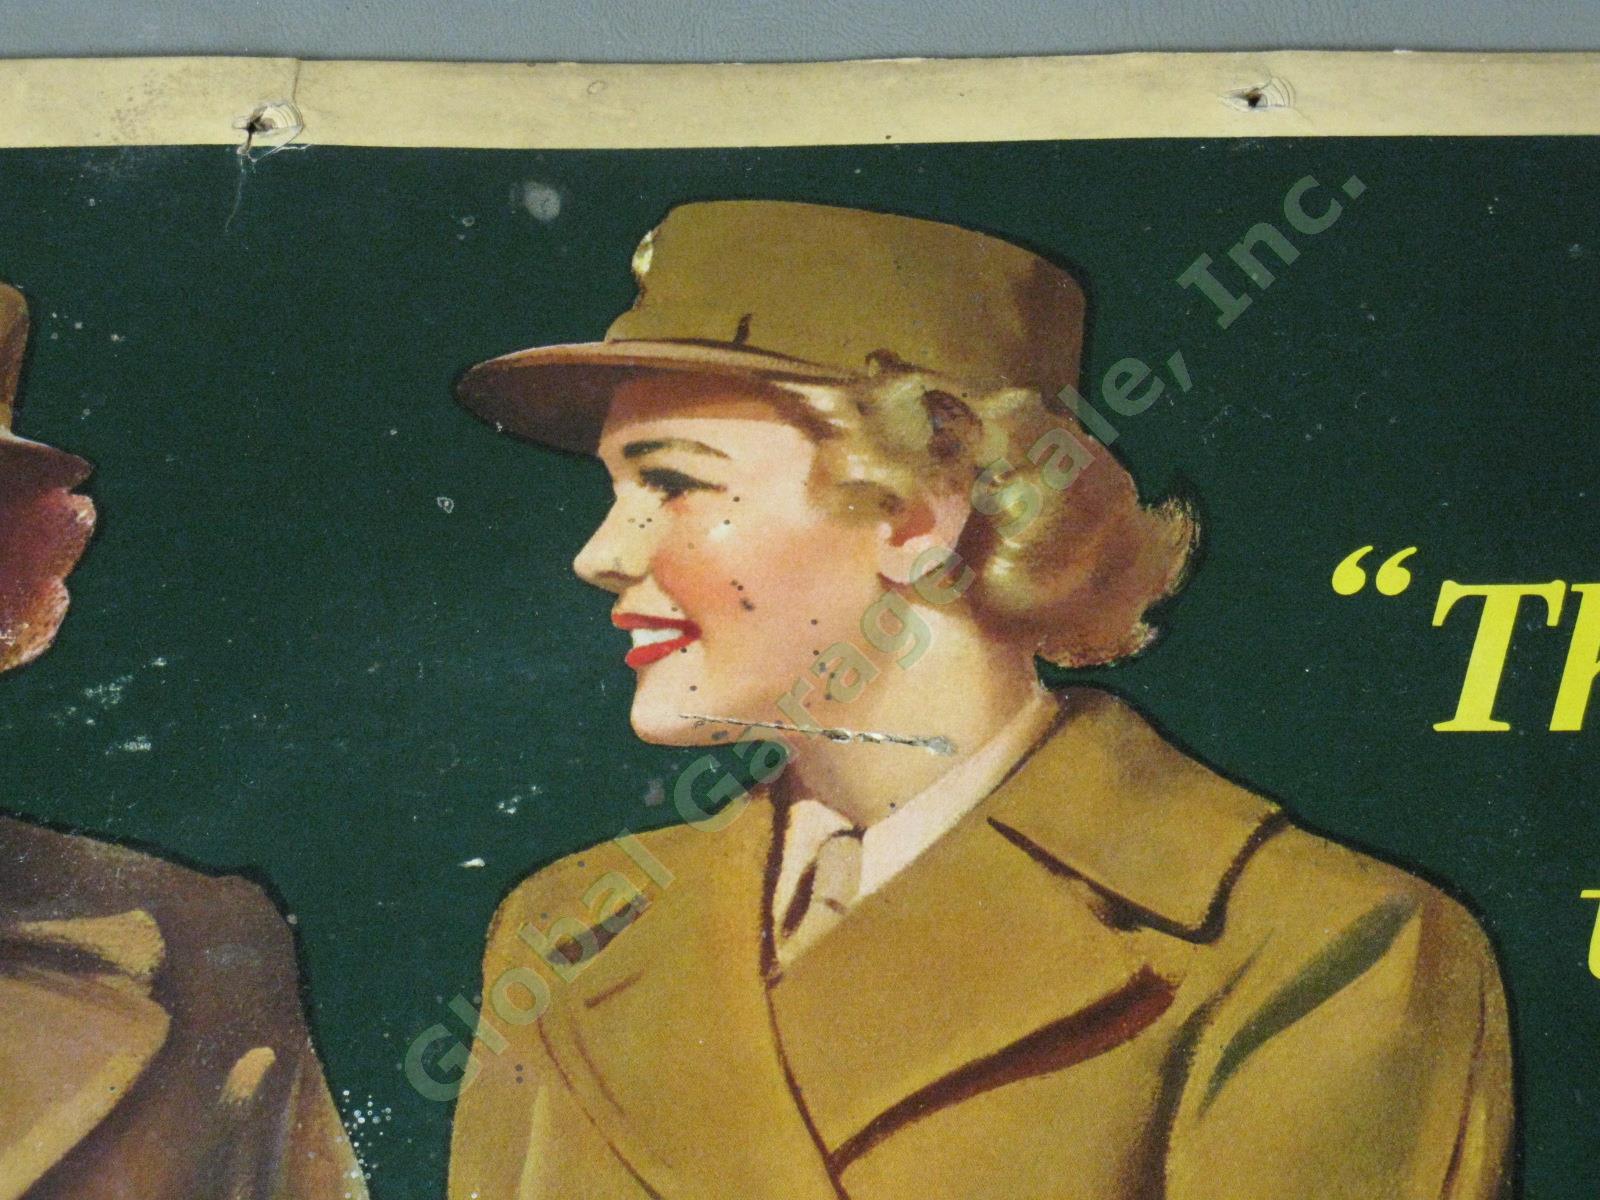 Vtg 1943 Drink Coca Cola Cardboard Litho Sign Advertising Poster 20x36 WWII Era 4